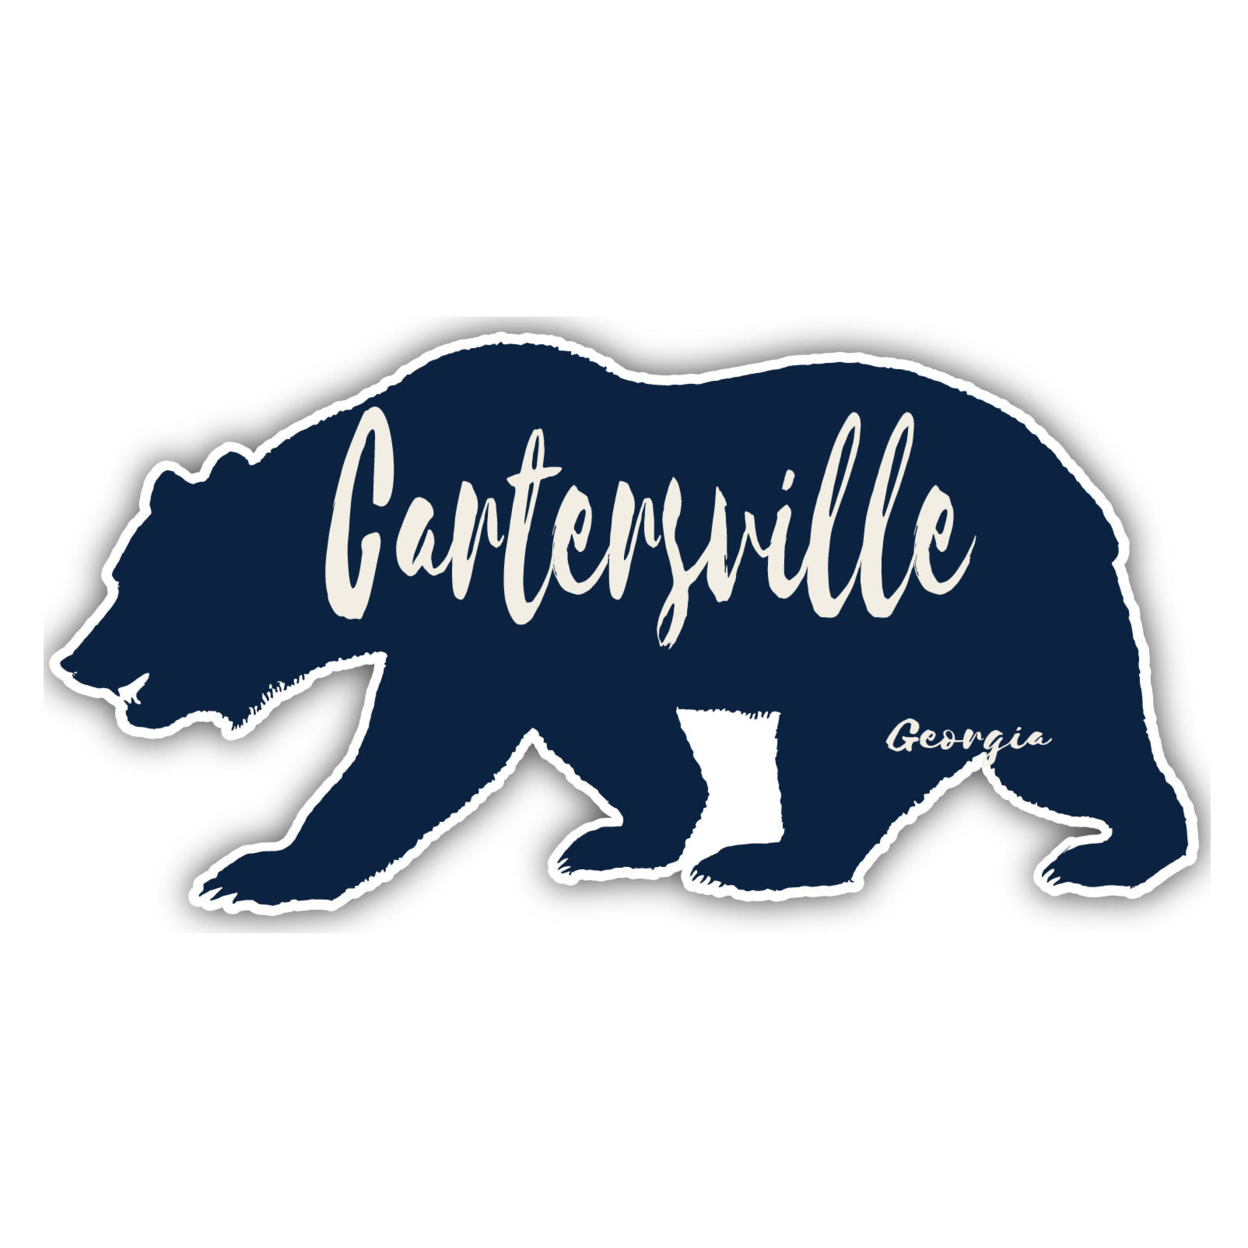 Cartersville Georgia Souvenir Decorative Stickers (Choose Theme And Size) - Single Unit, 8-Inch, Bear